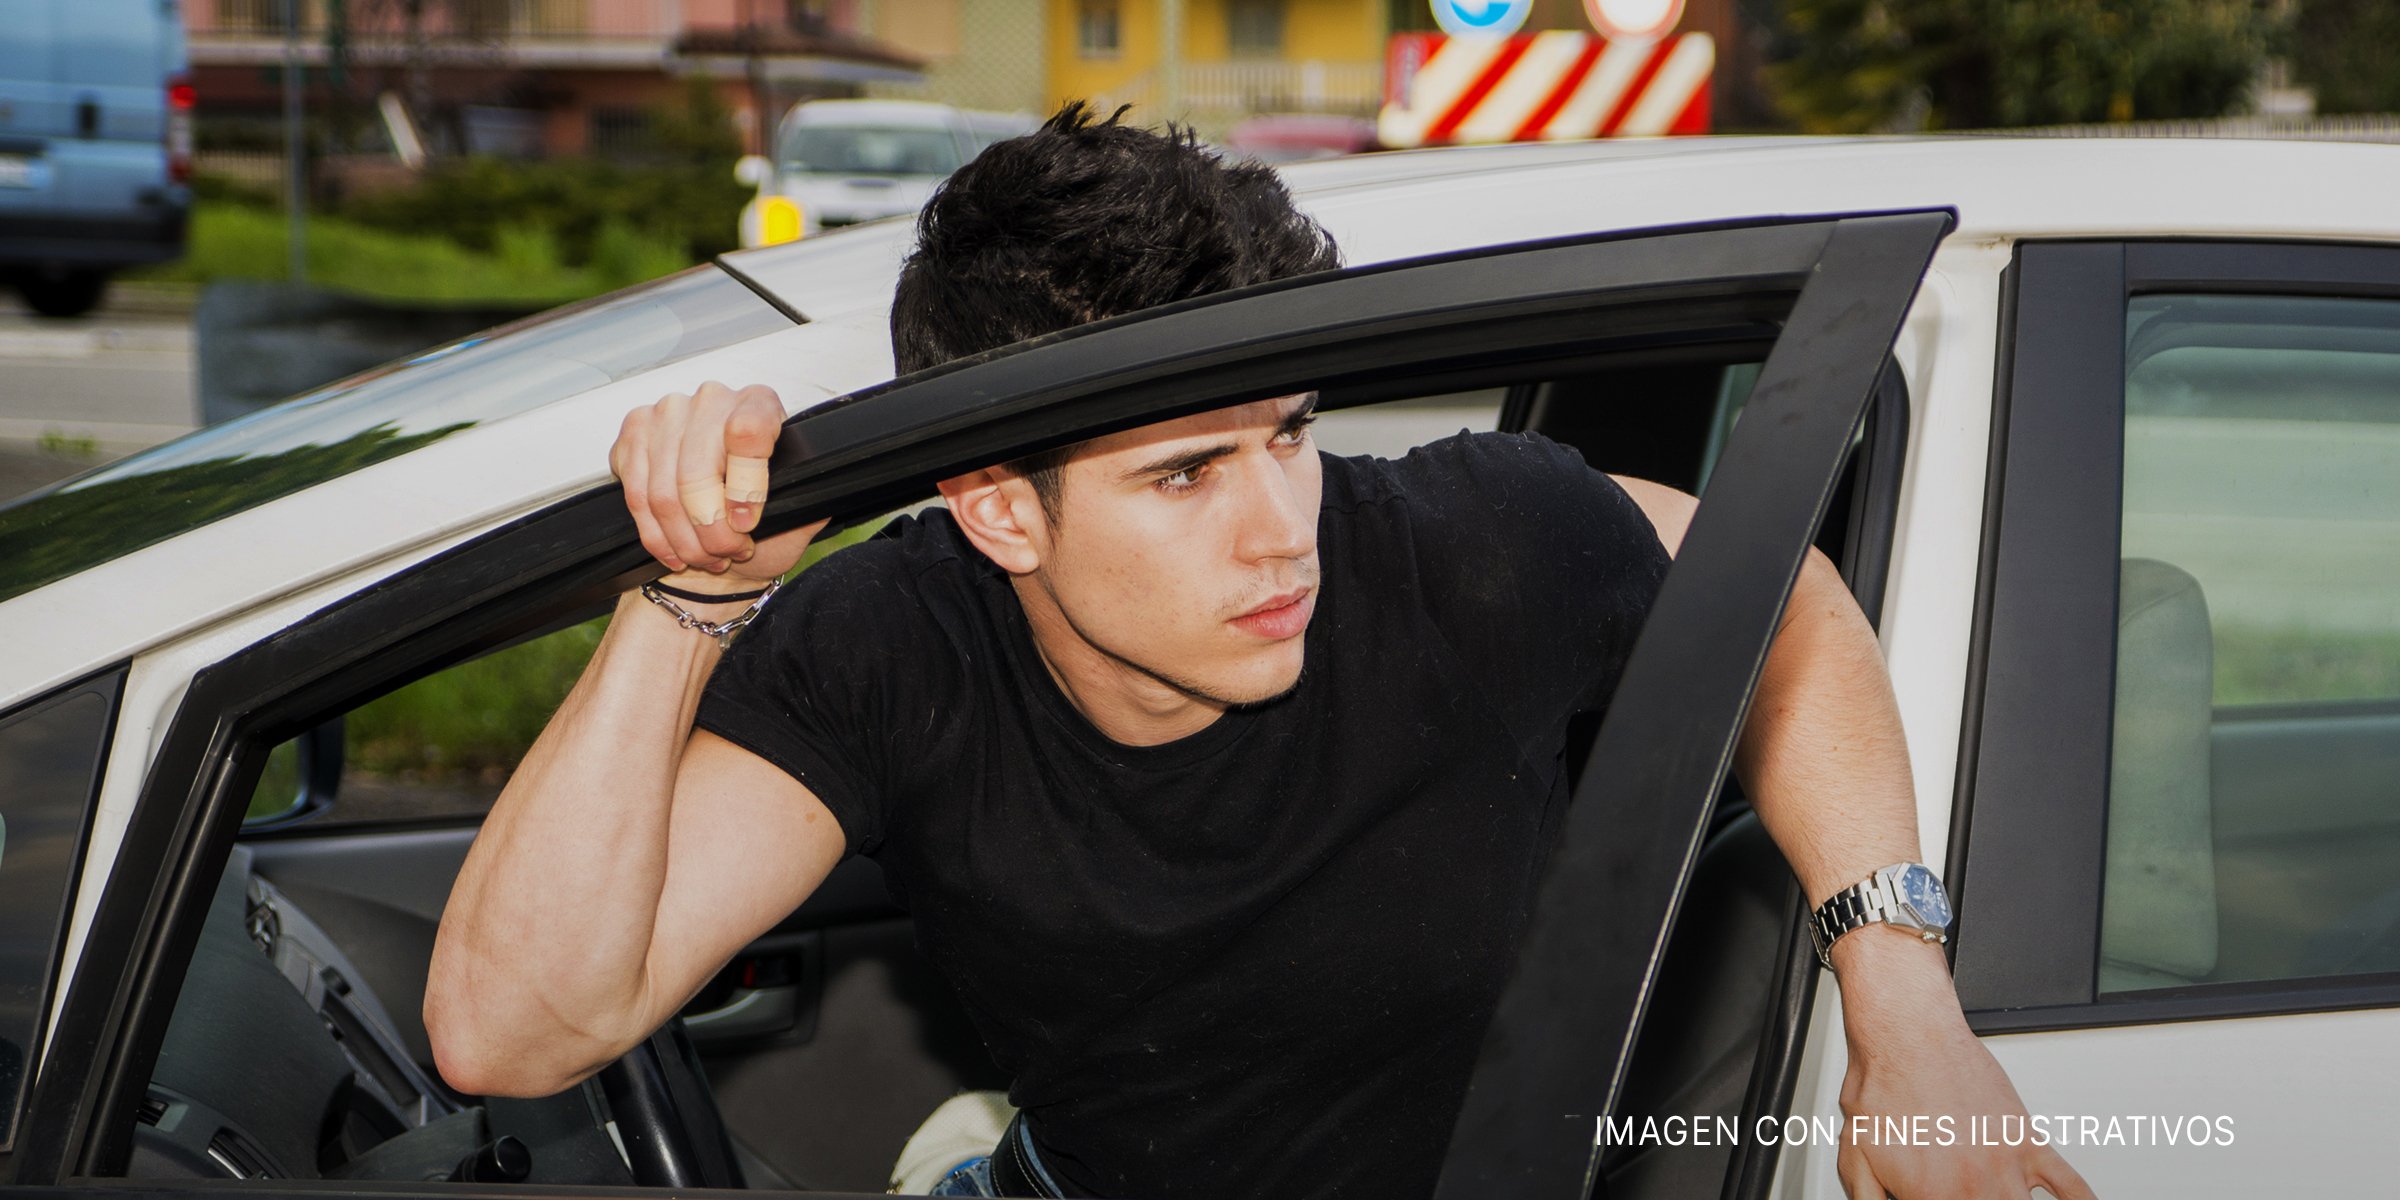 Joven saliendo de un automóvil | Foto: Shutterstock